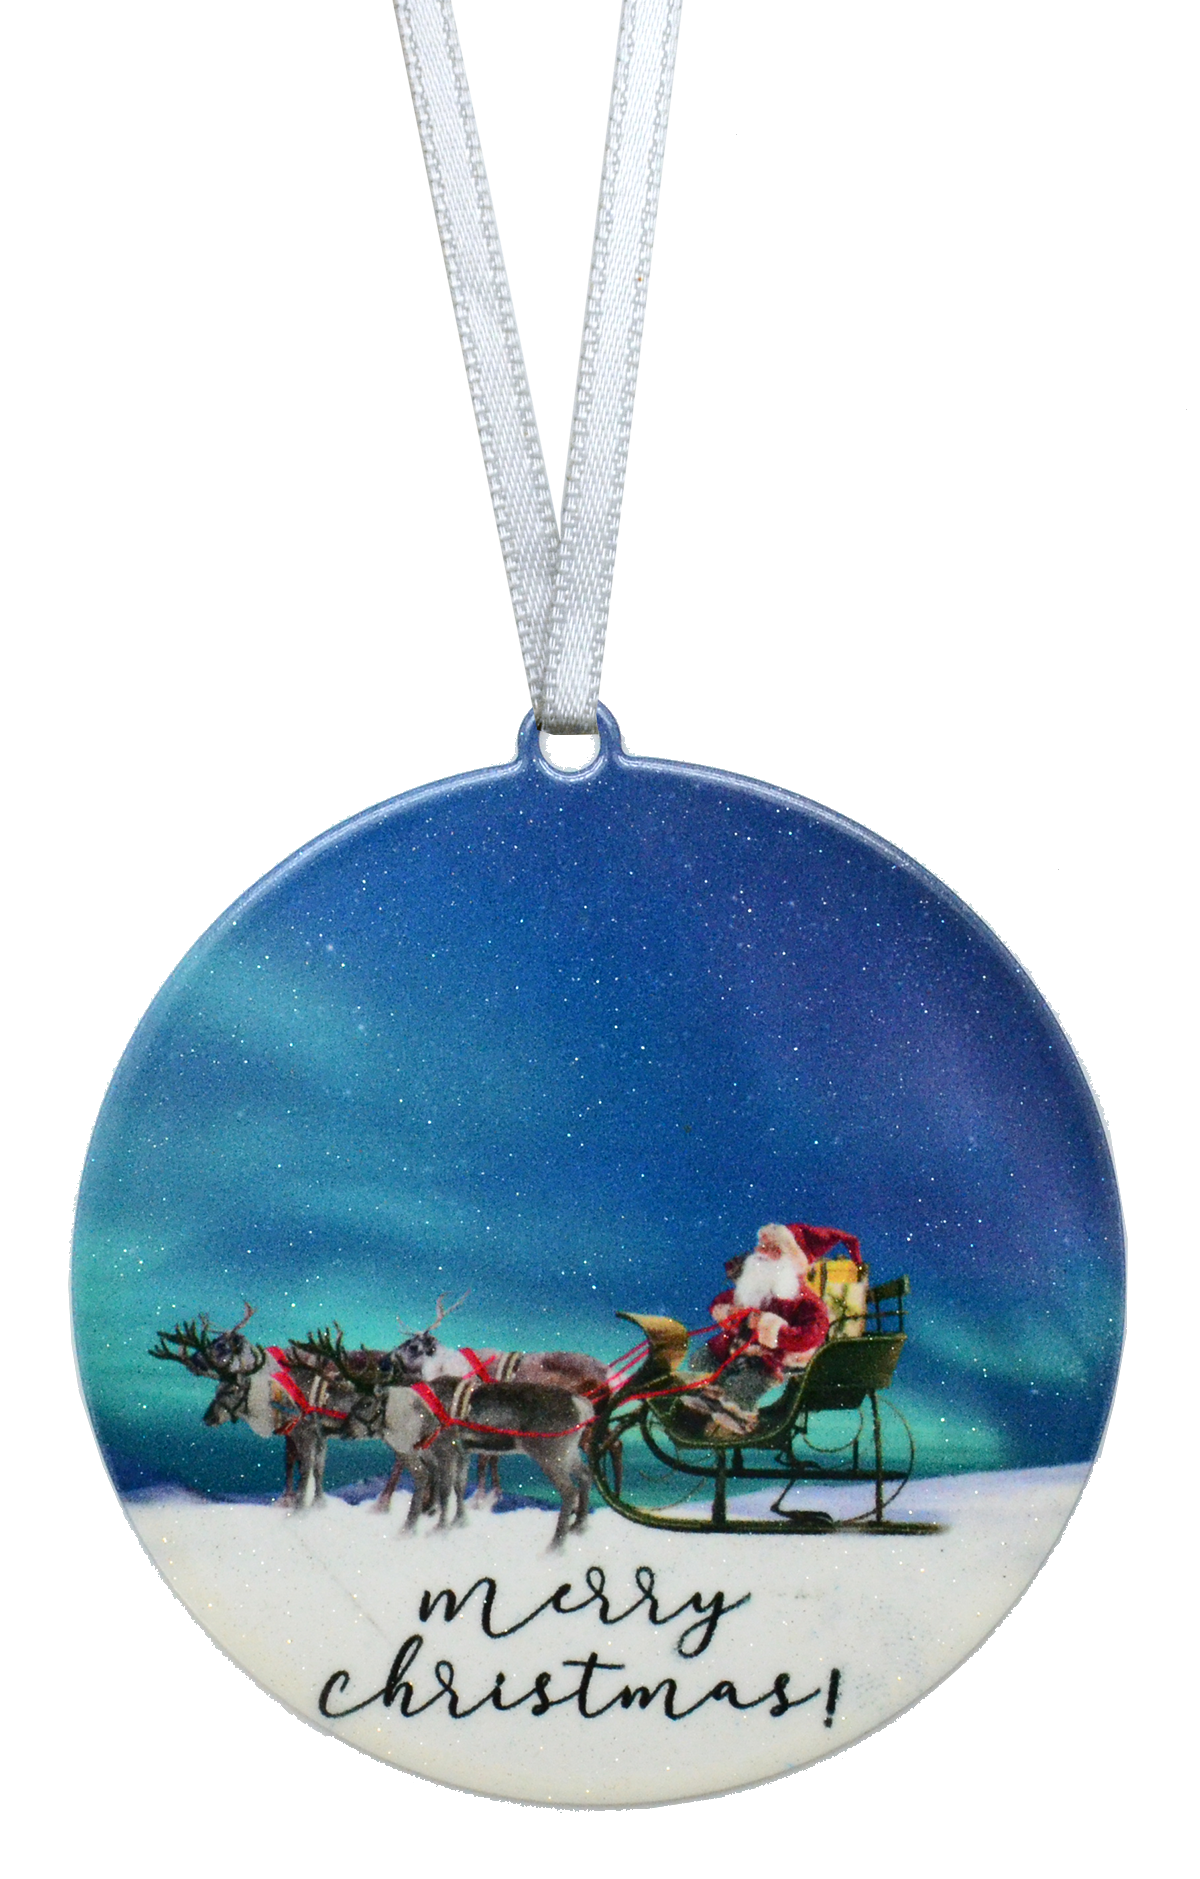 Aurora Christmas Santa 4 inch ornament, Item# 8252